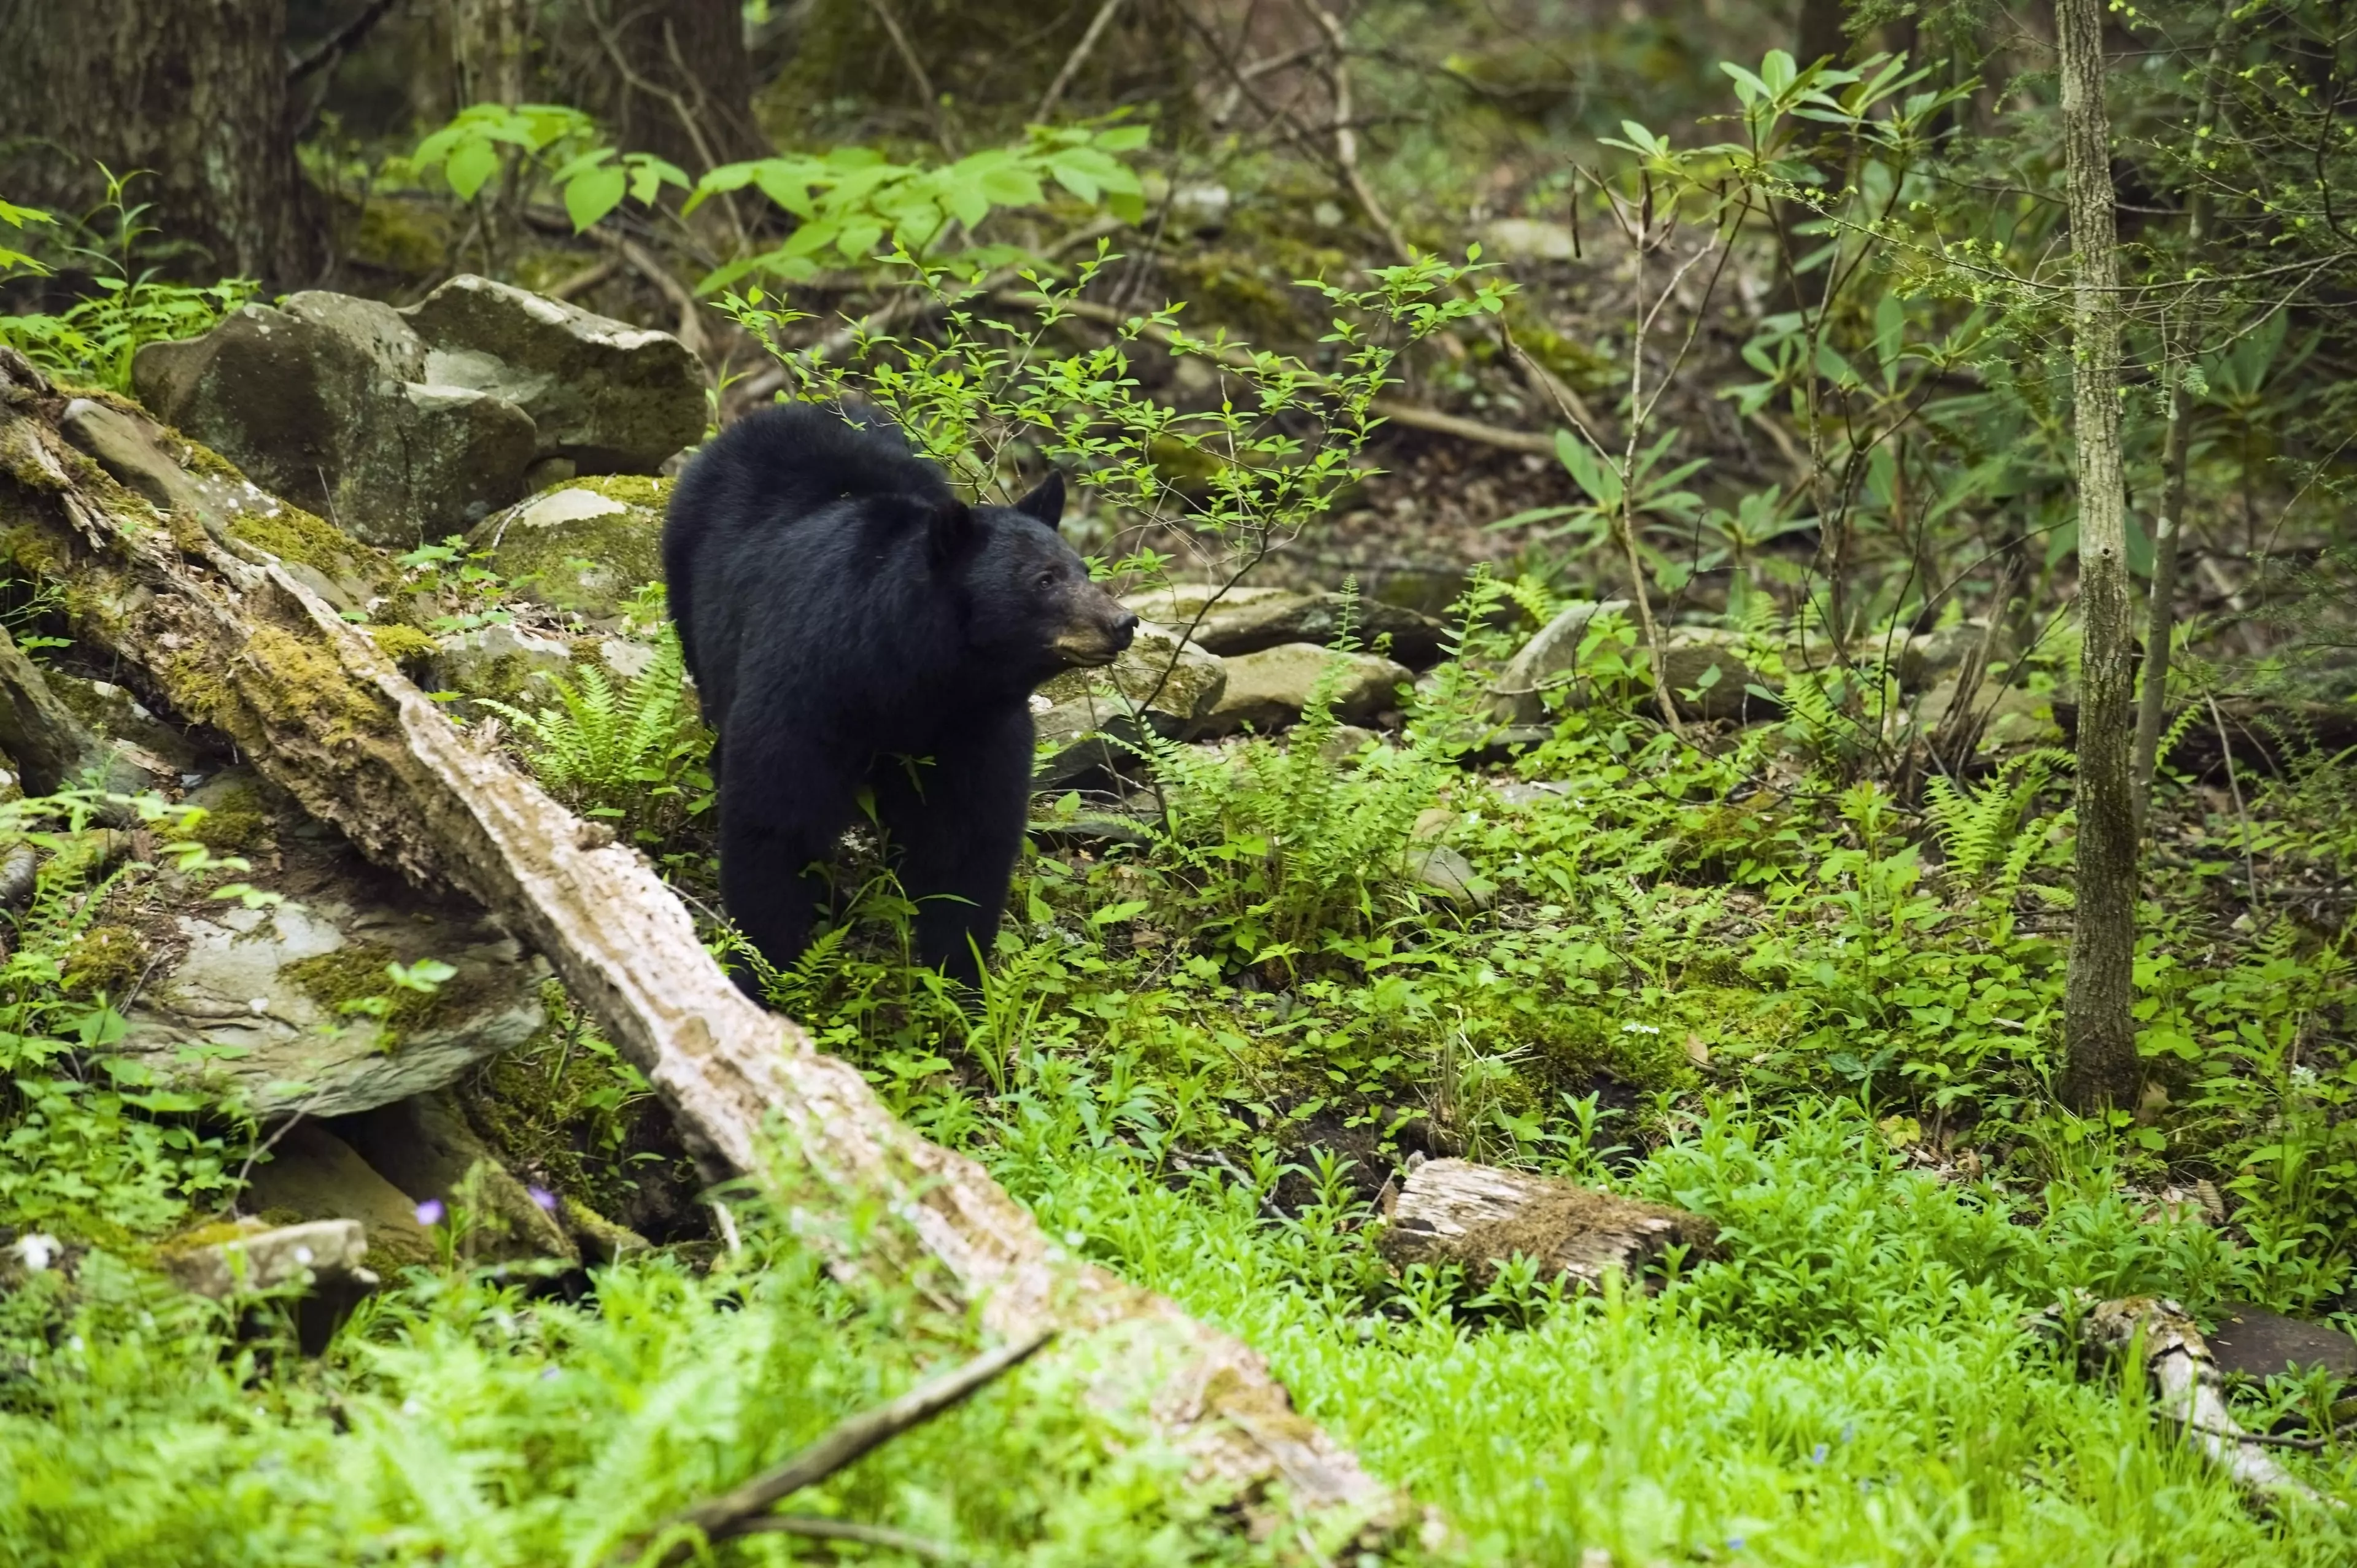 Stock image of a black bear.